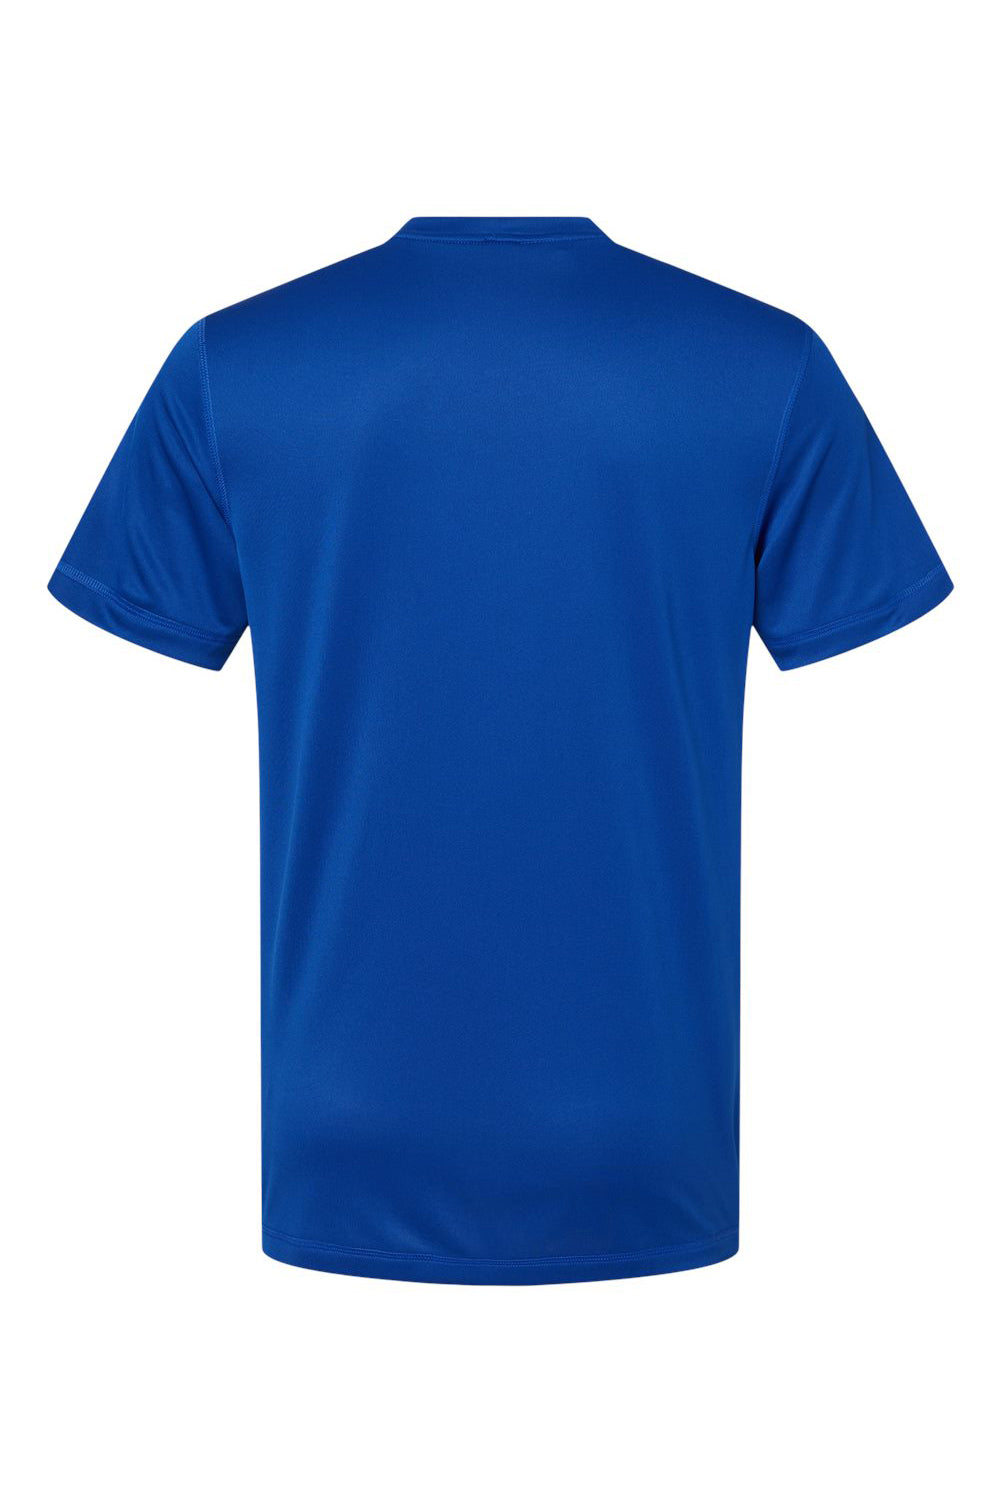 Adidas A376 Mens UPF 50+ Short Sleeve Crewneck T-Shirt Collegiate Royal Blue Flat Back